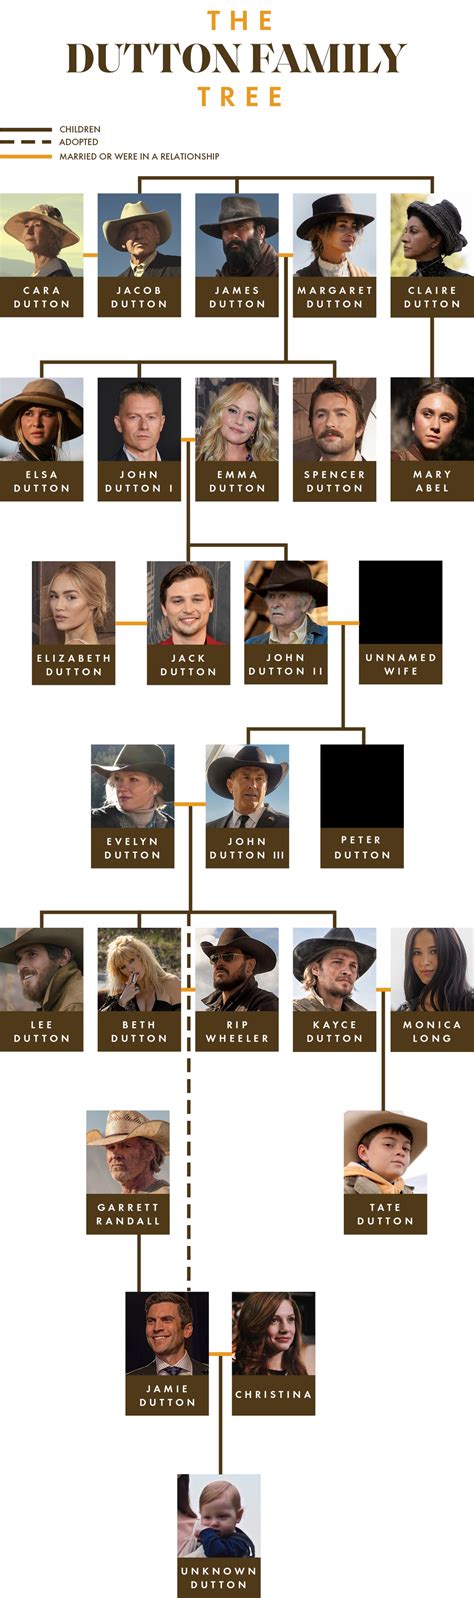 yellowstone dutton family tree chart